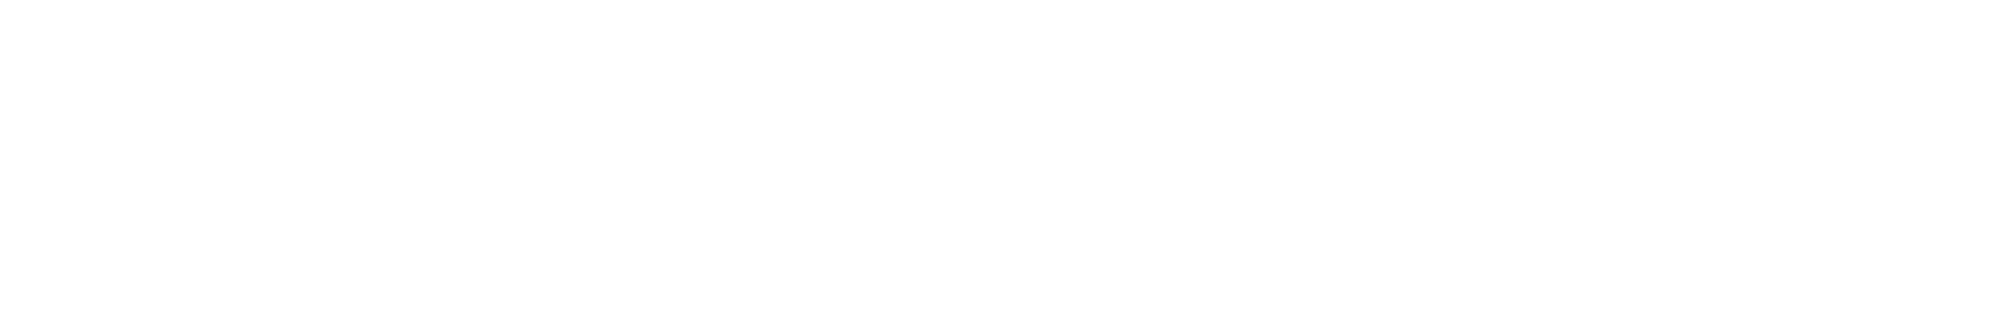 Tarnkappe-Media.de logo